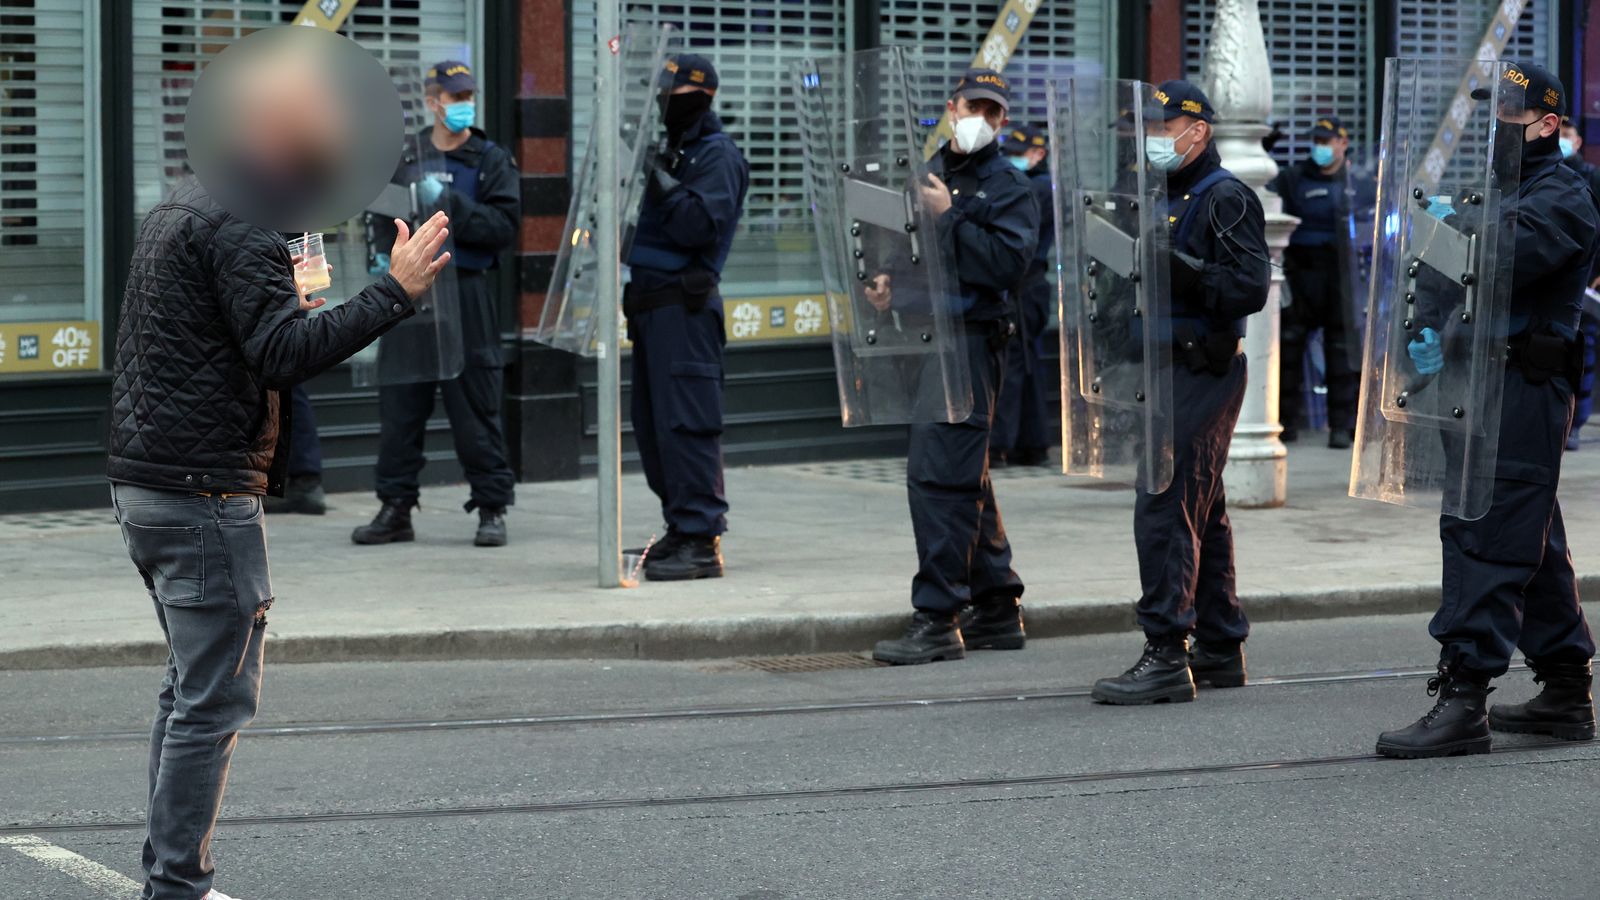 Dublin Arrests after police disperse crowds News UK Video News Sky